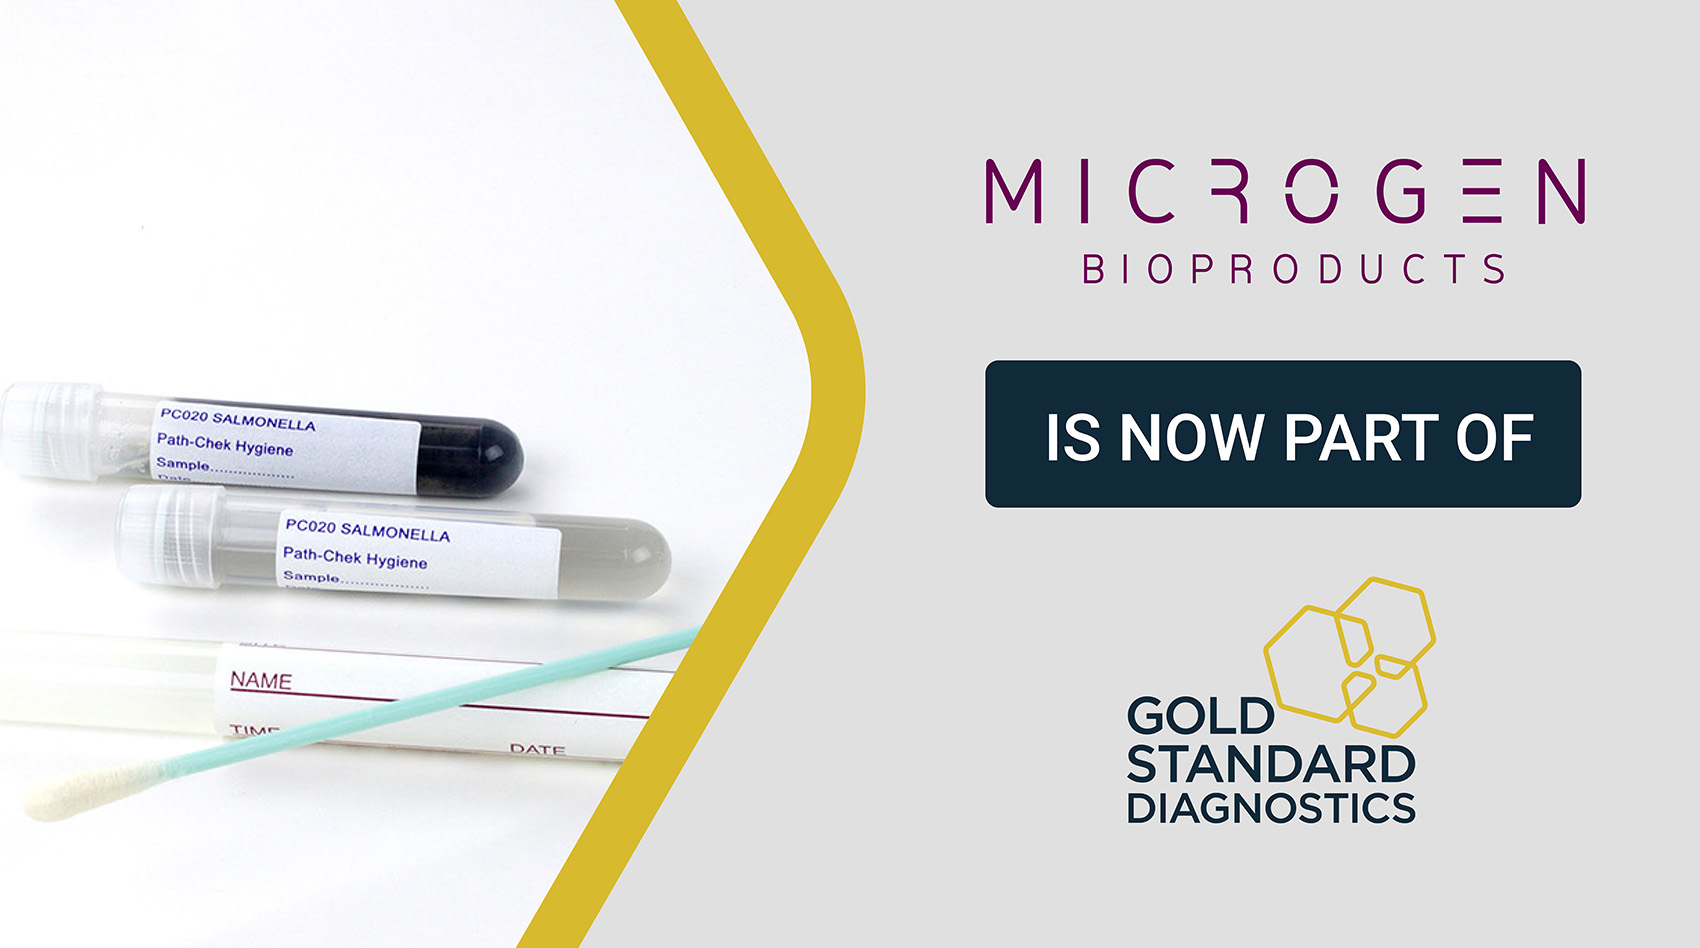 Microgen is now part of Gold Standard Diagnostics